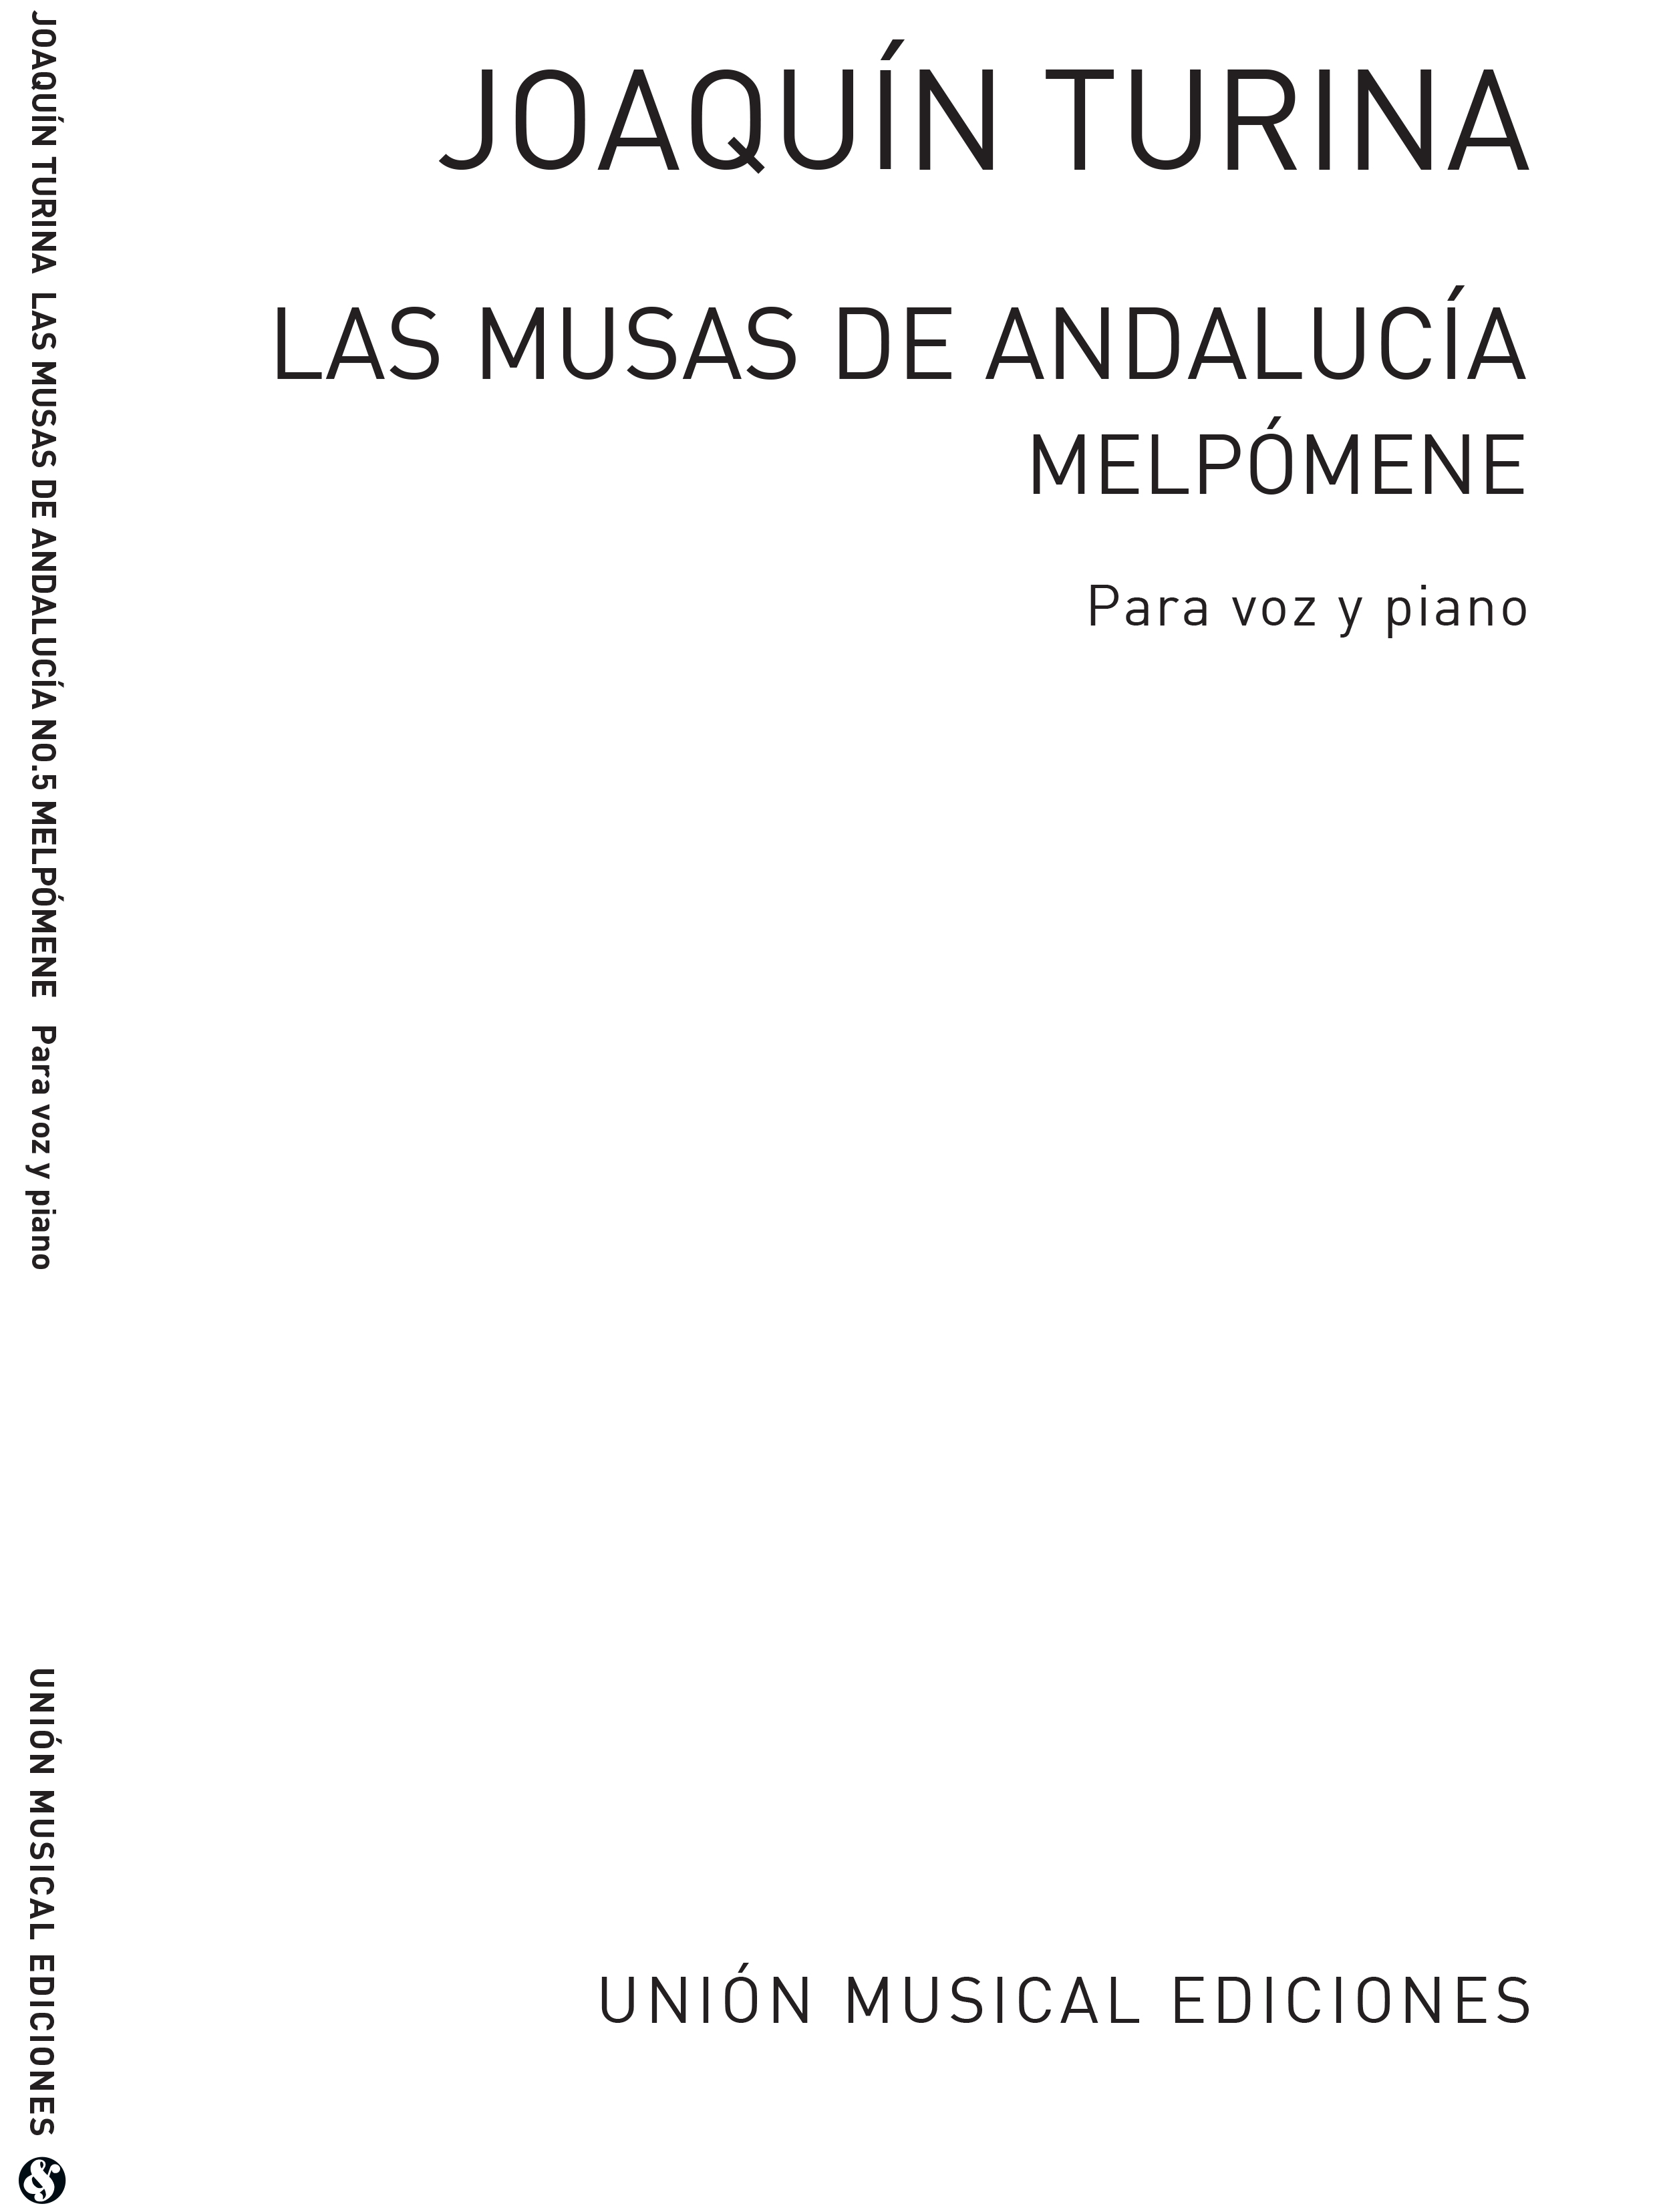 Joaqun Turina: Melpomene De Las Musas De Andalucia: Voice: Instrumental Work